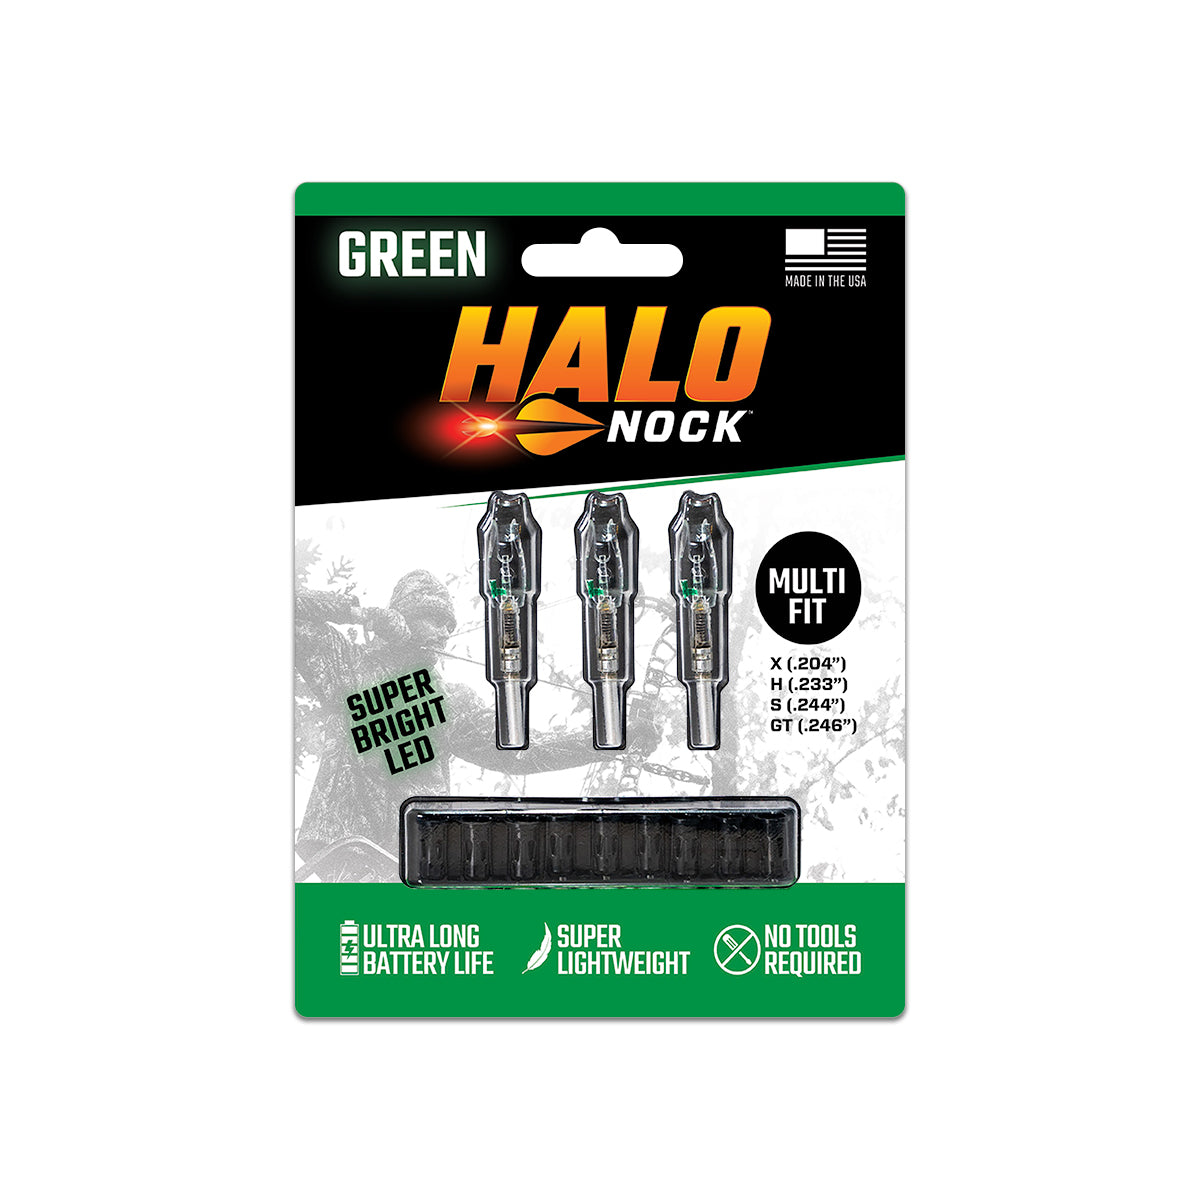 Halo Lighted Nock Multi Fit 3pk